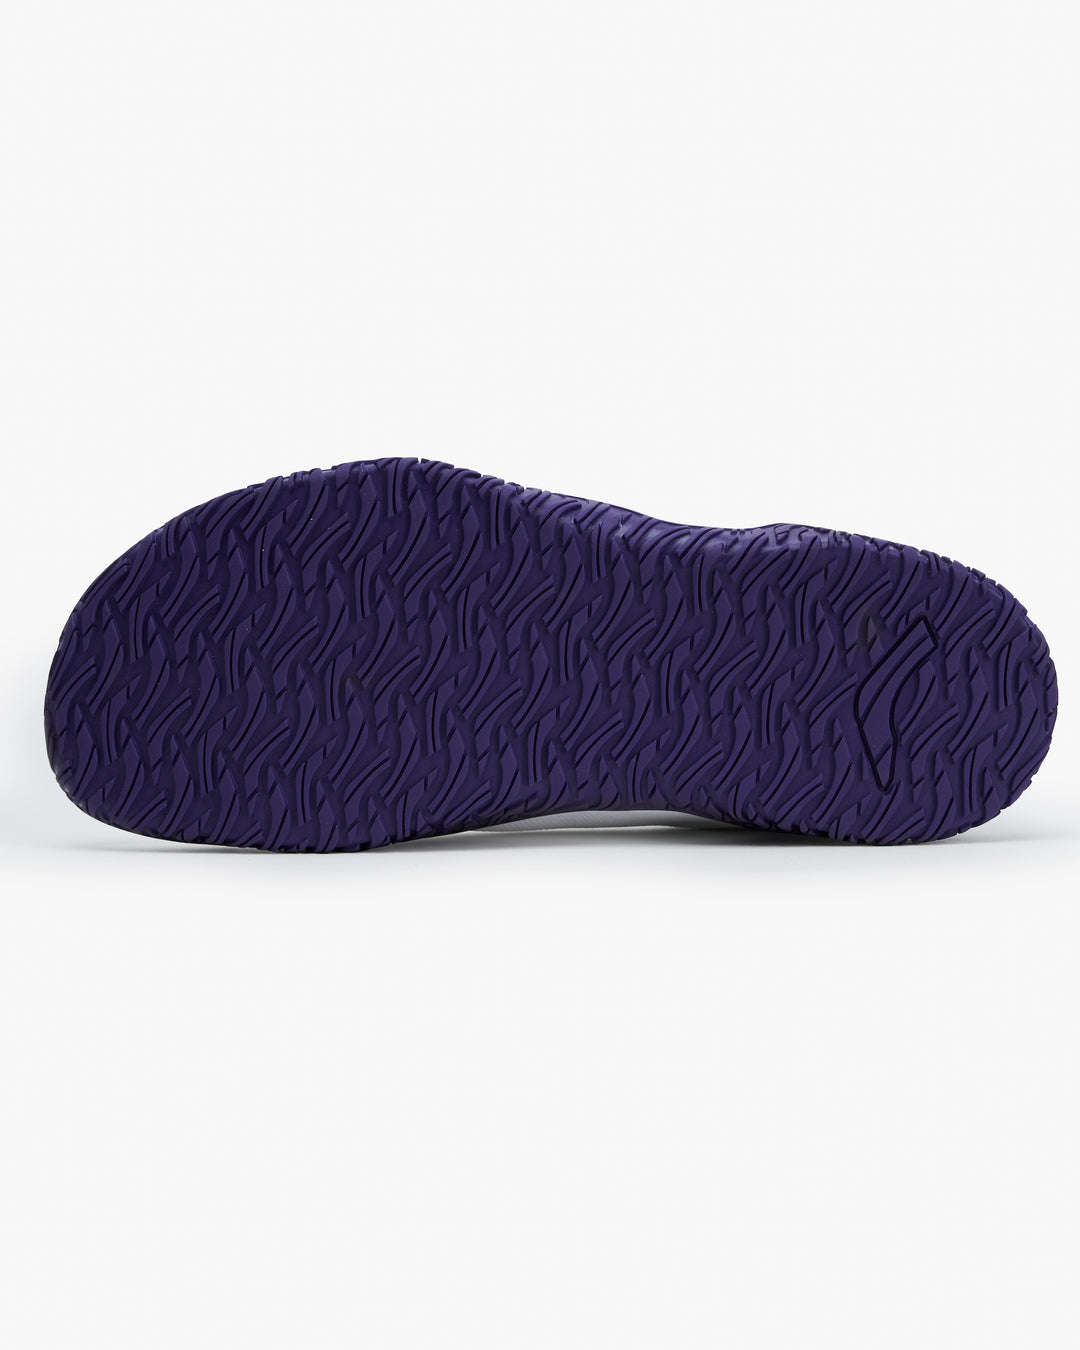 Chaussures Avancus Apex 1.5 Power Blanc/Violet 